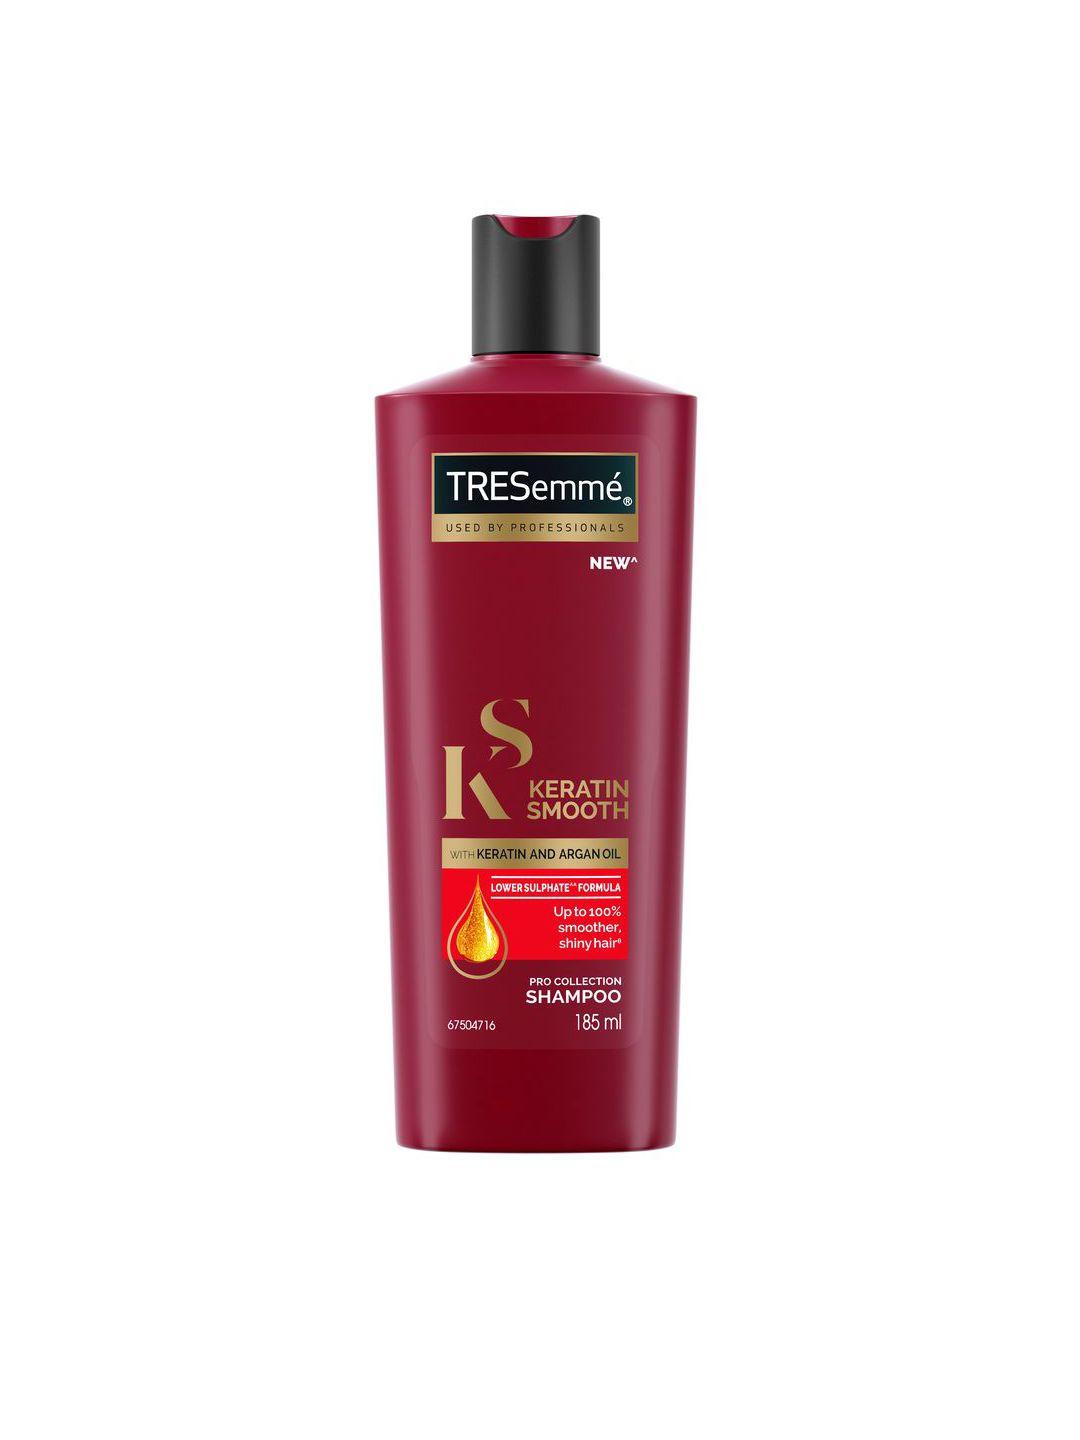 tresemme keratin smooth shampoo with keratin & argan oil for straight hair-185 ml